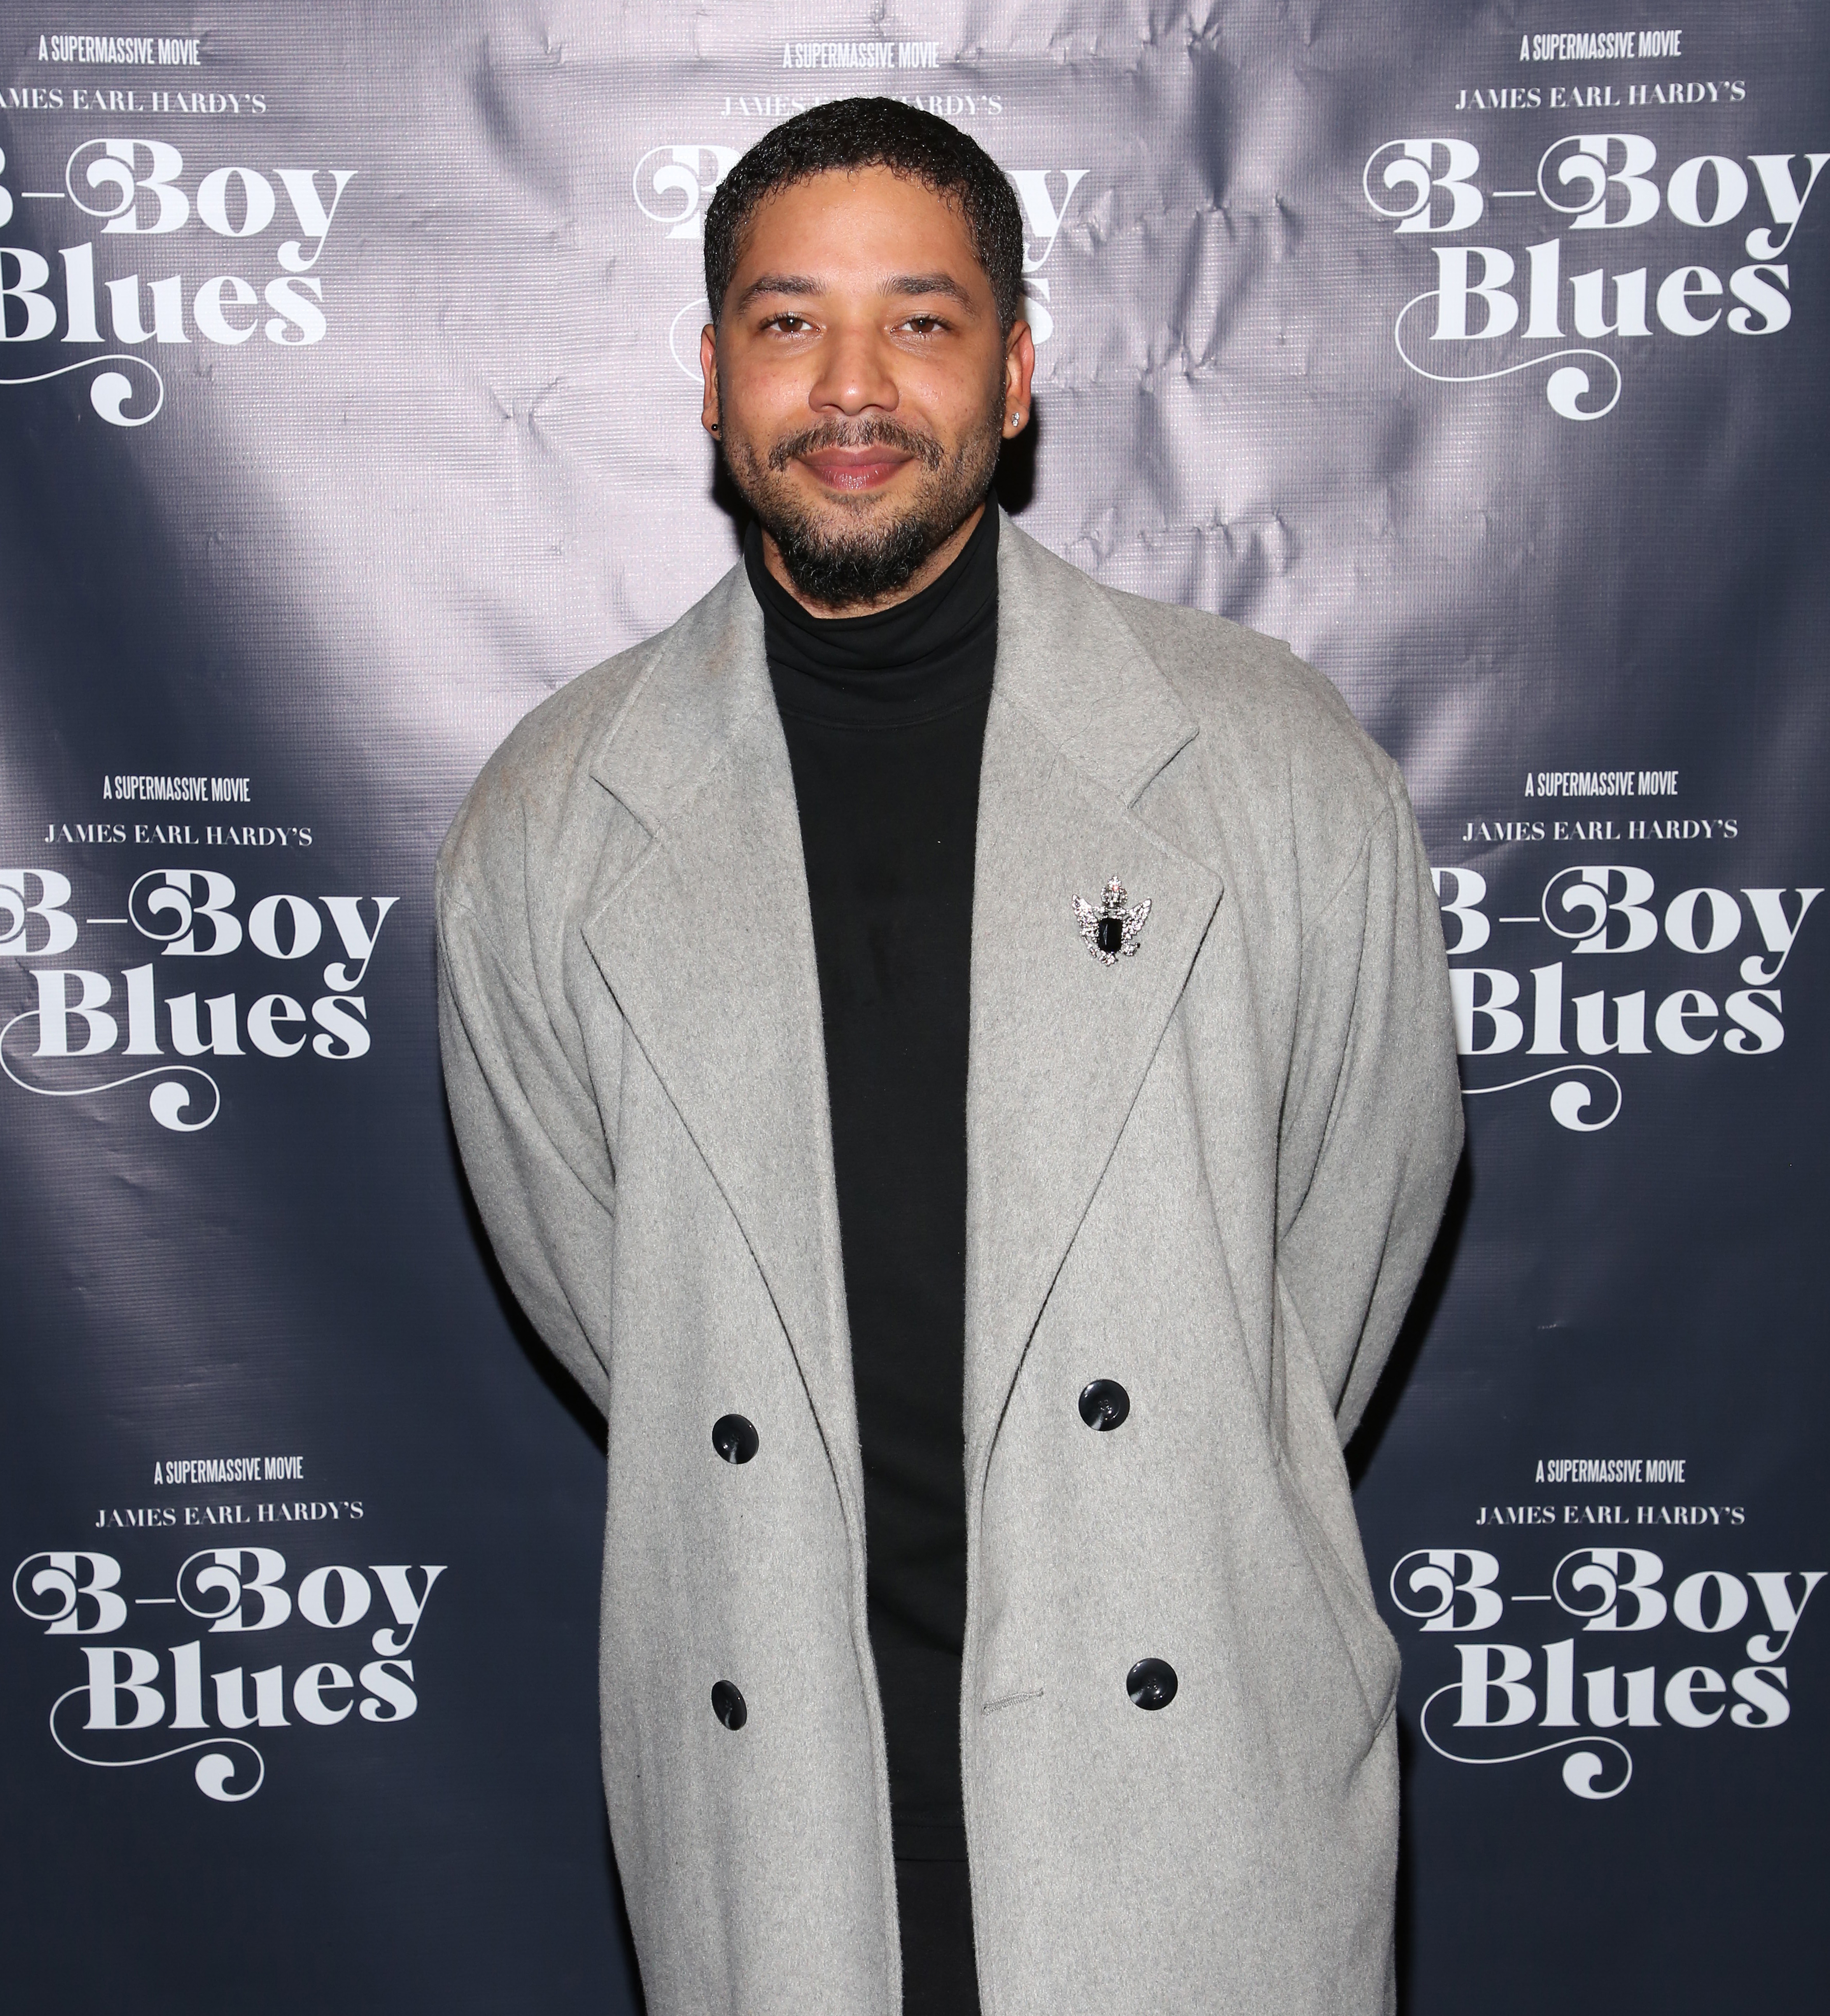 Director Jussie Smollett attends the New York Screening of "B-Boy Blues" at AMC Magic Johnson Harlem on November 19, 2021 in New York City.